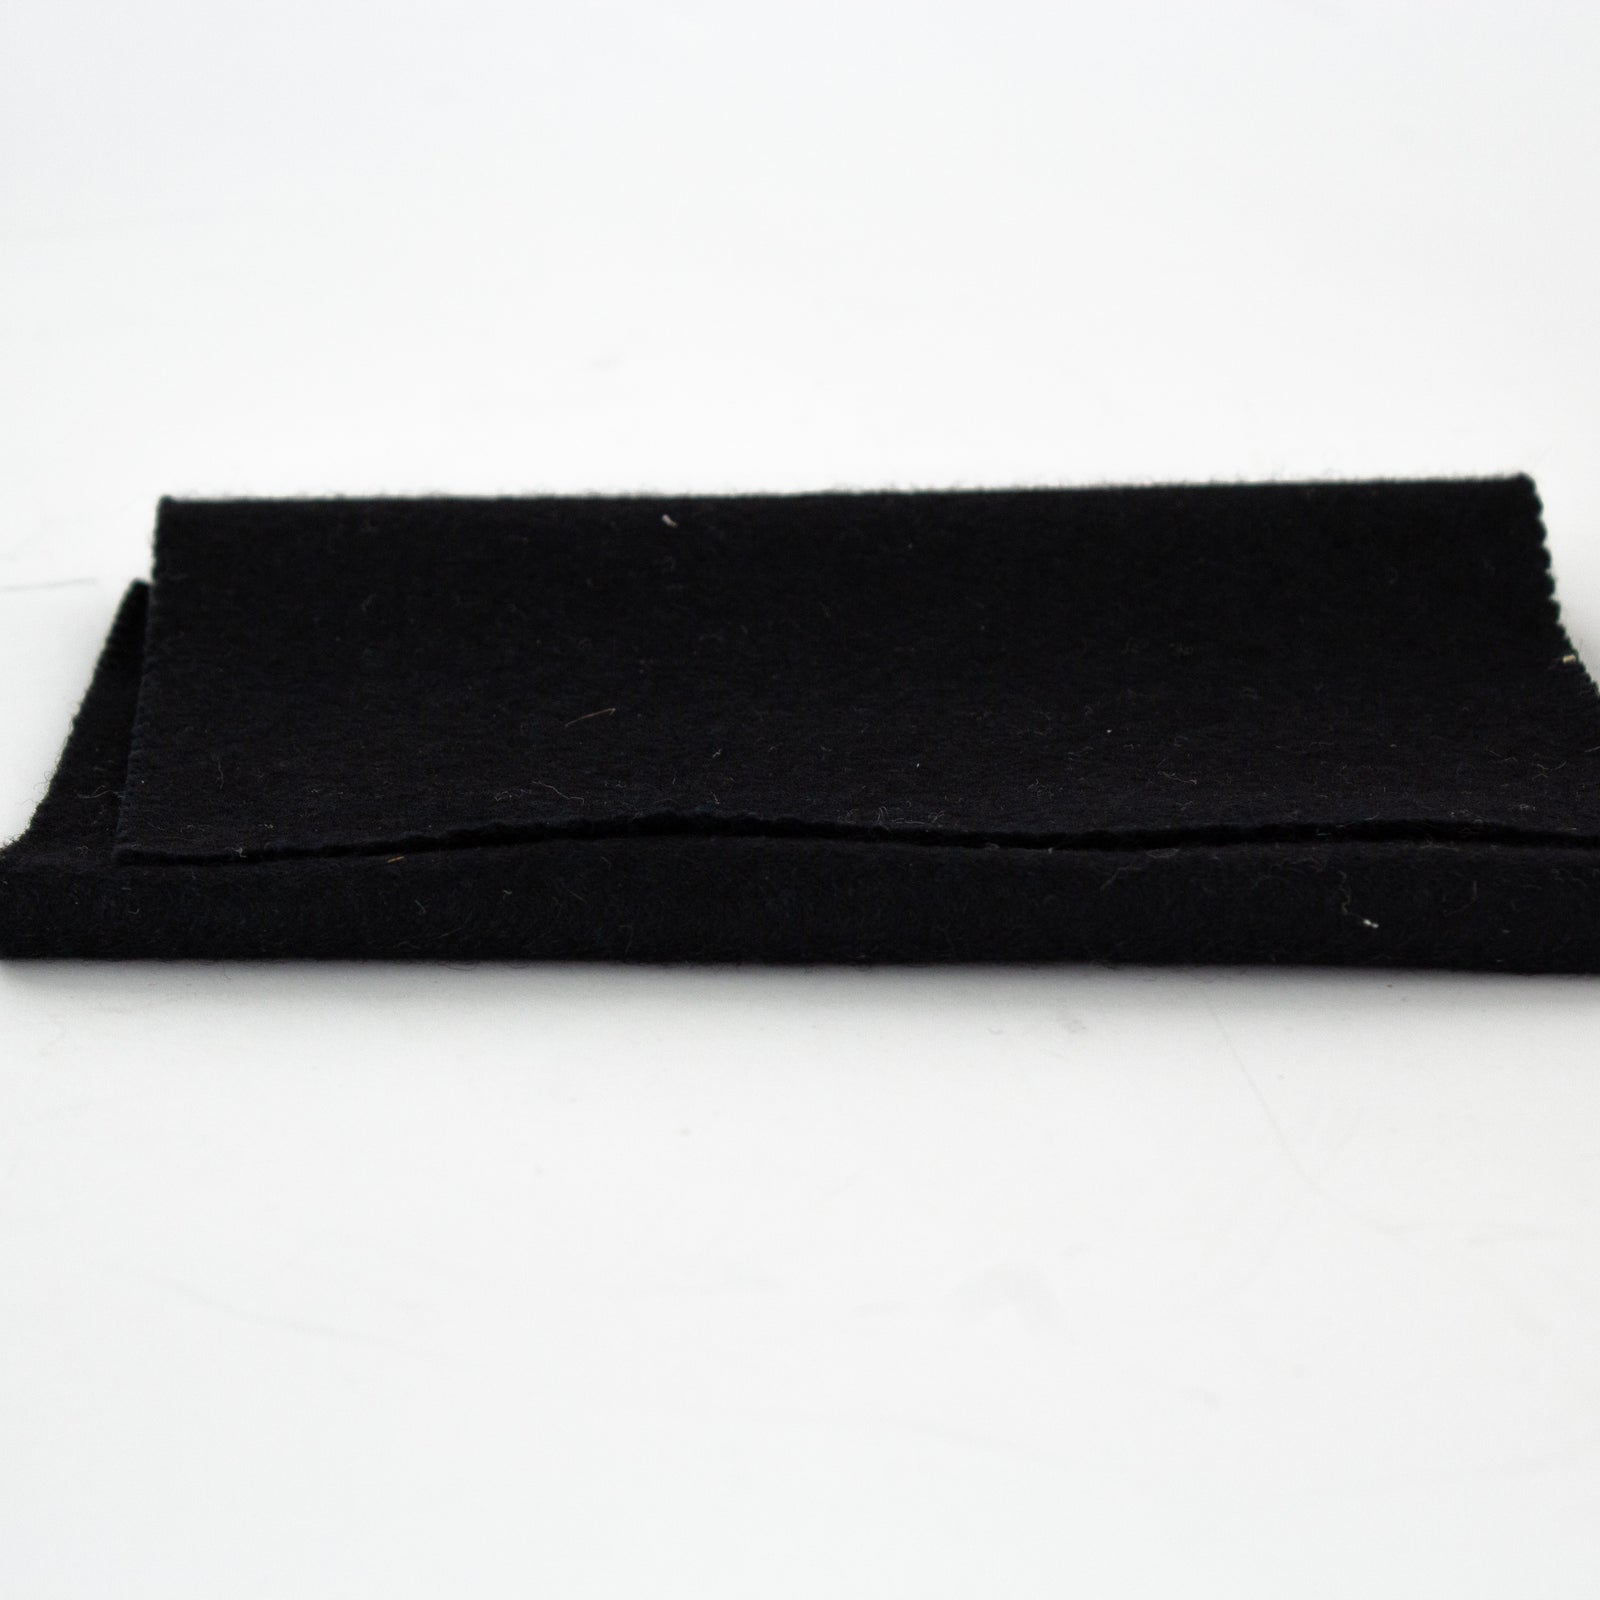 Lambskin Diamond Stitched Wallet Black